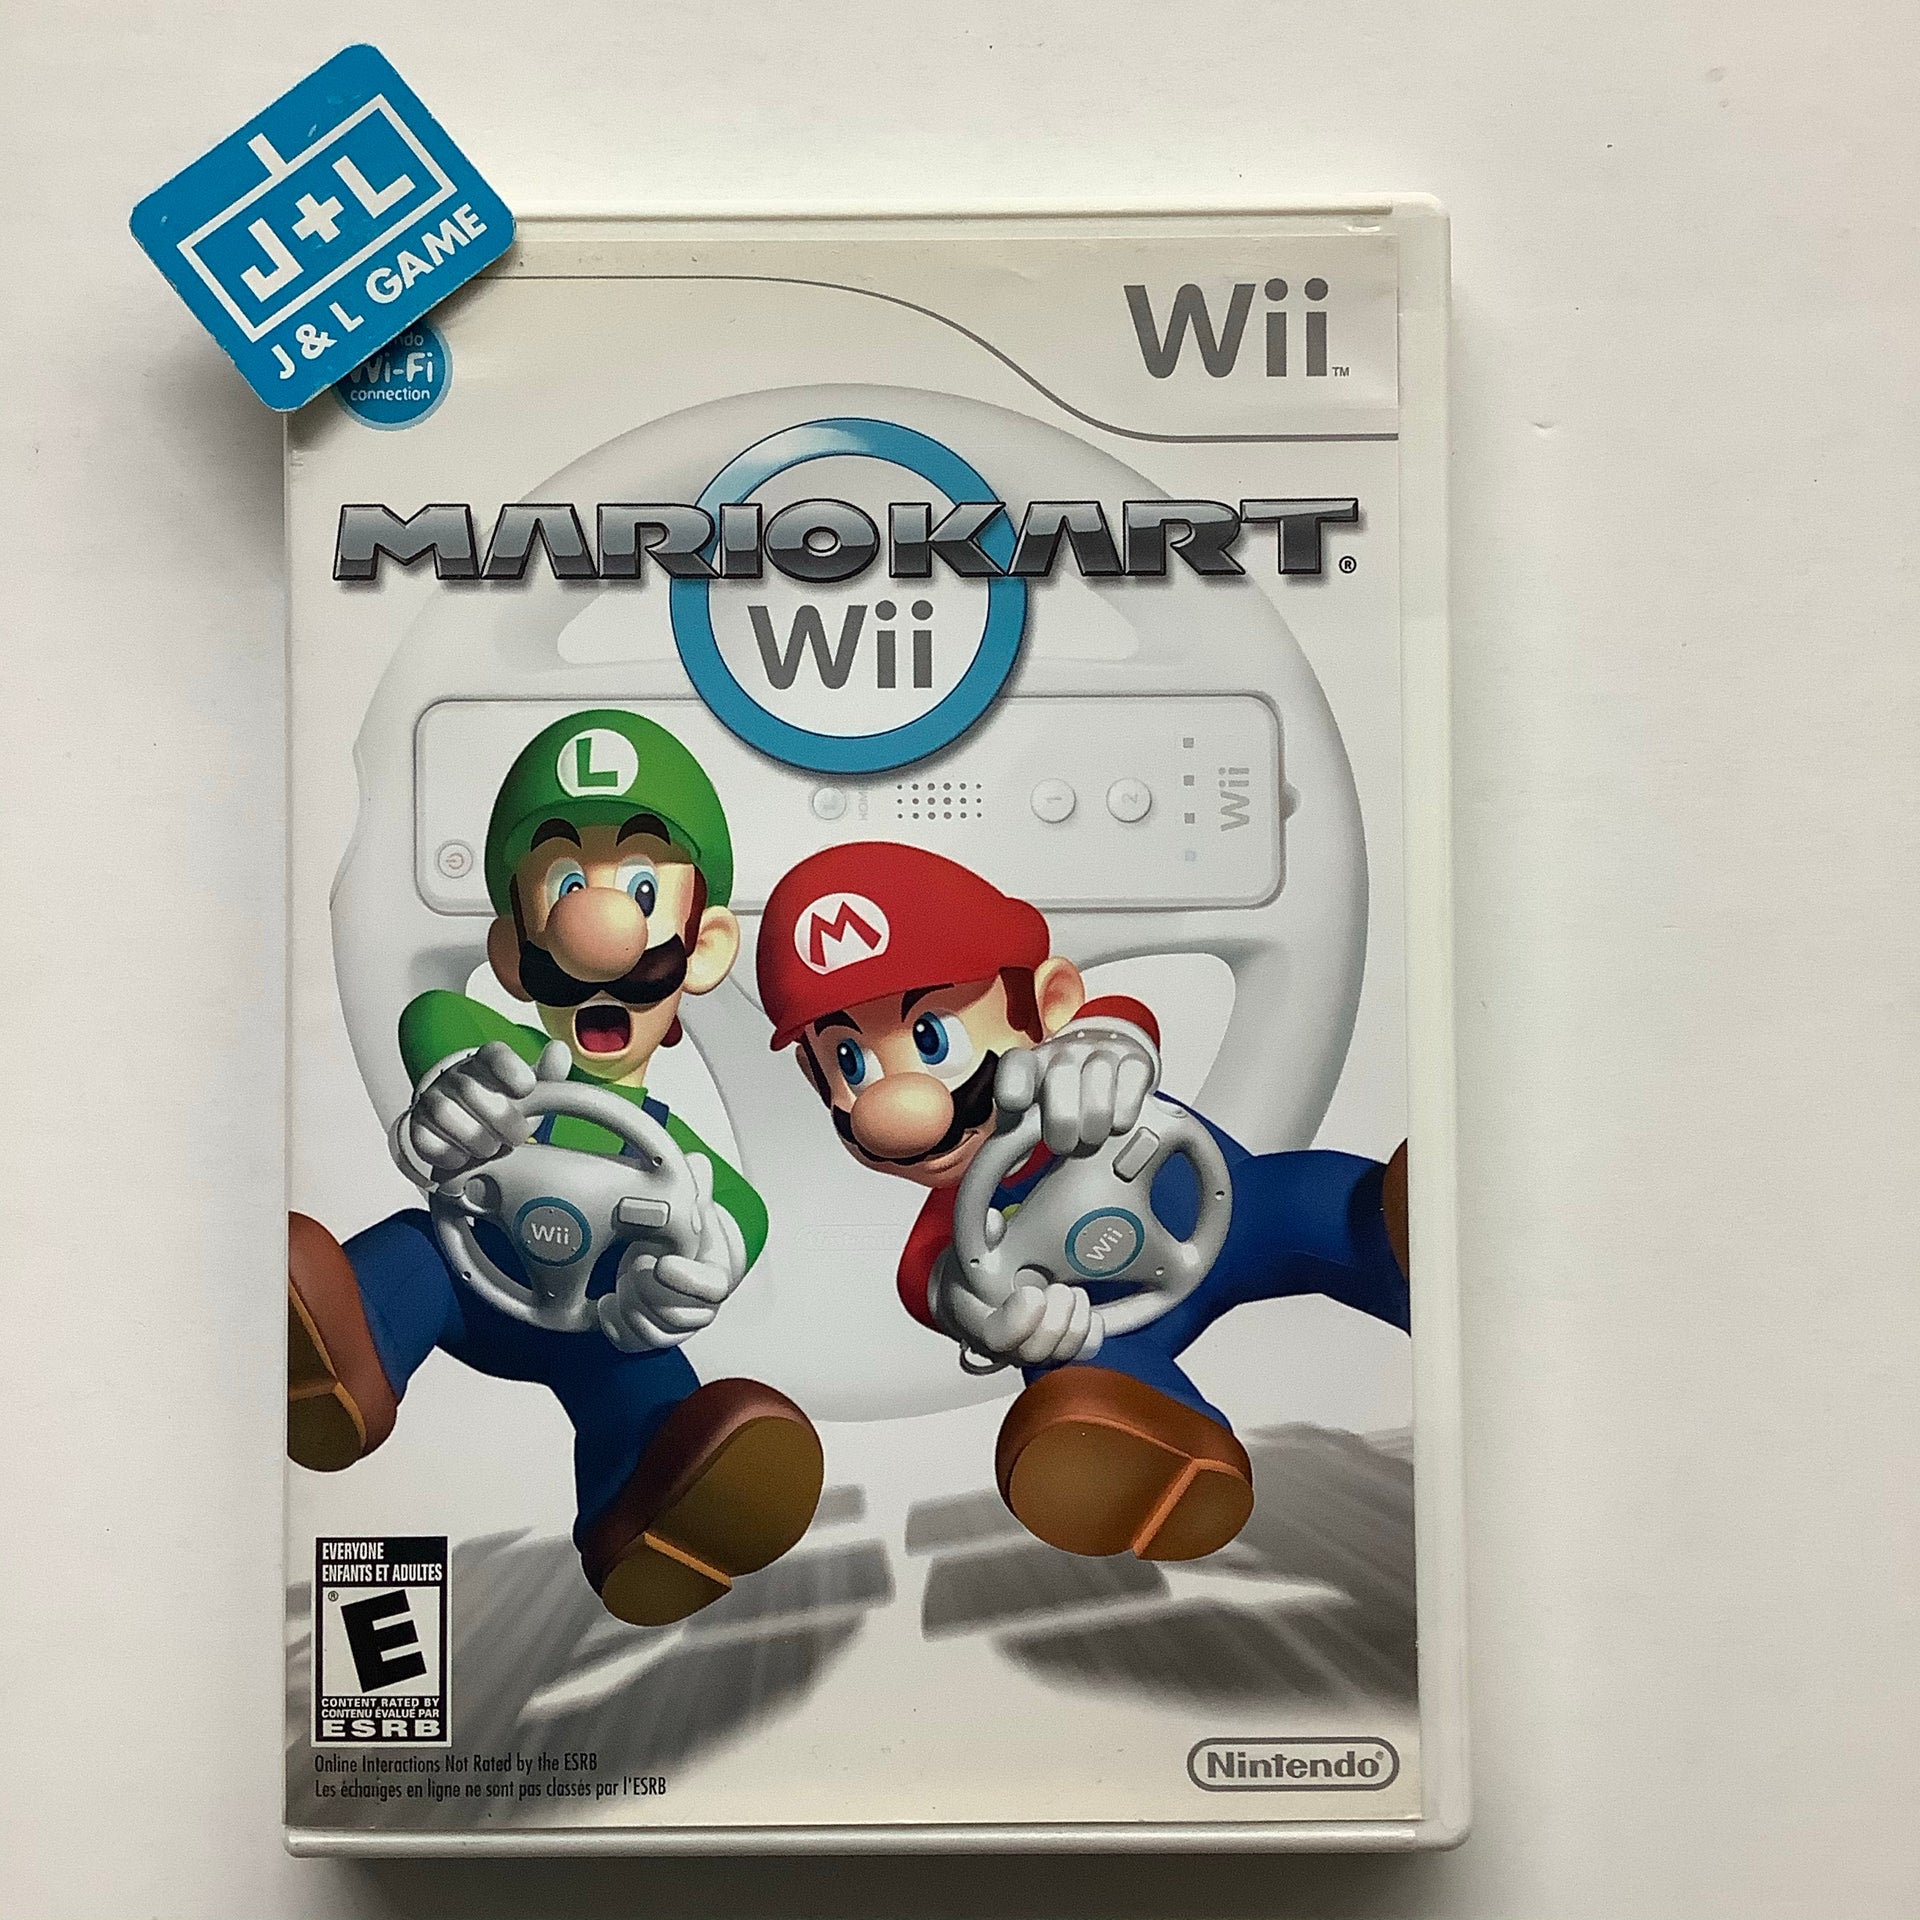  Mario Kart Wii - Game Only by Nintendo (Renewed